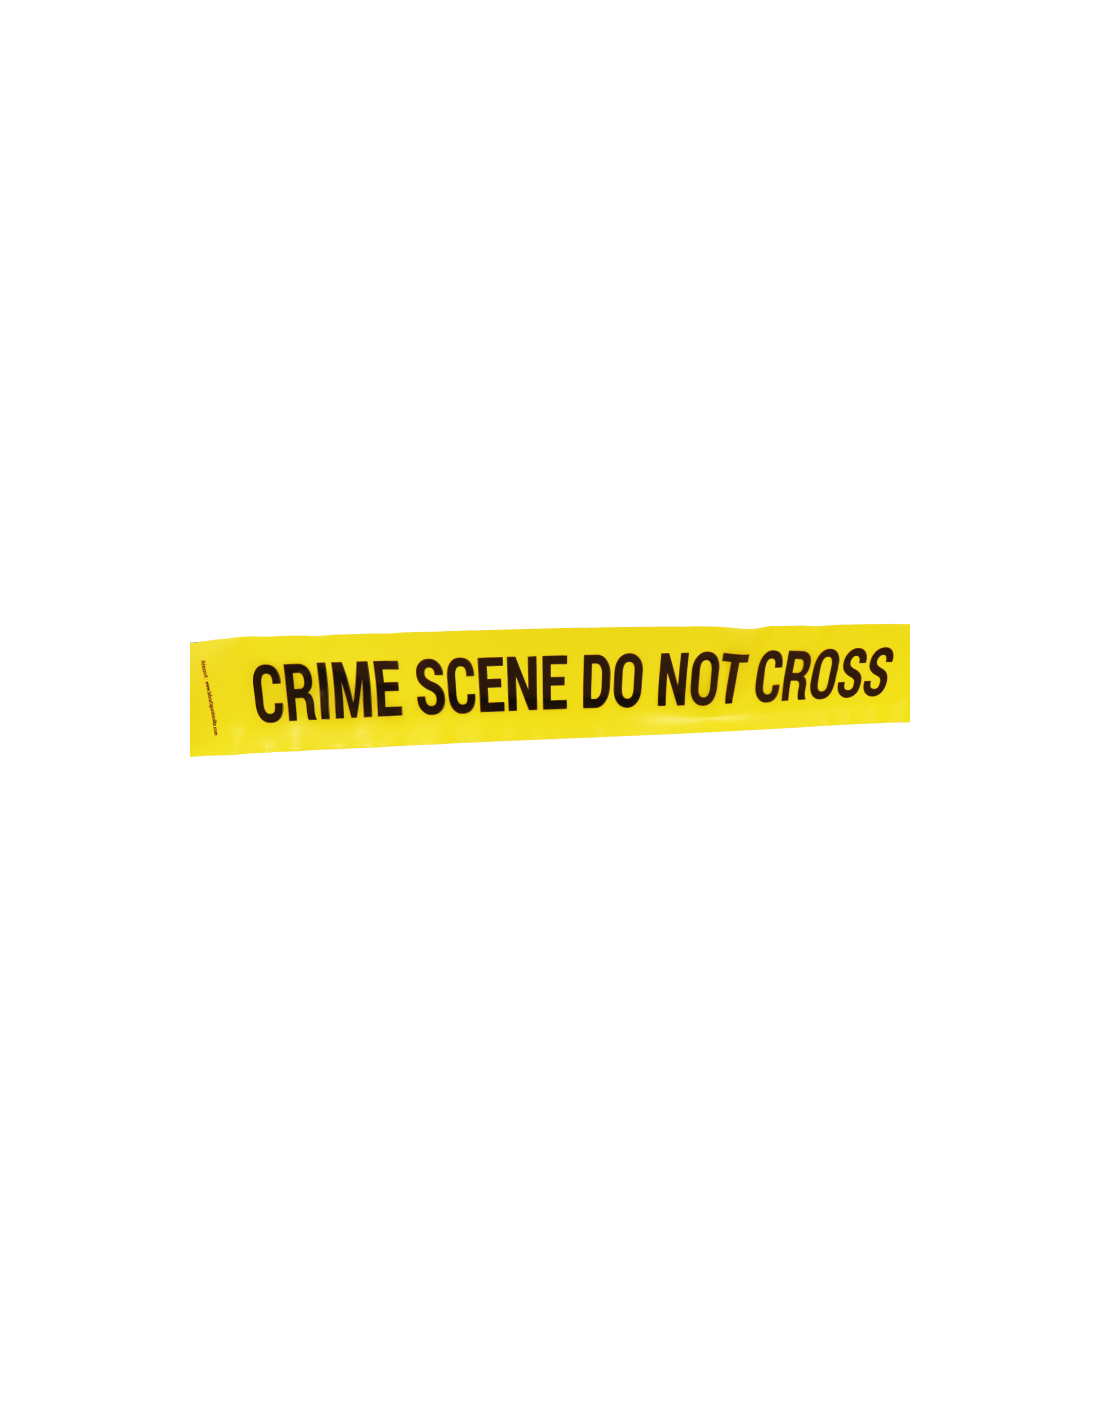 Crime Scene Do Not Cross PNG HD Quality